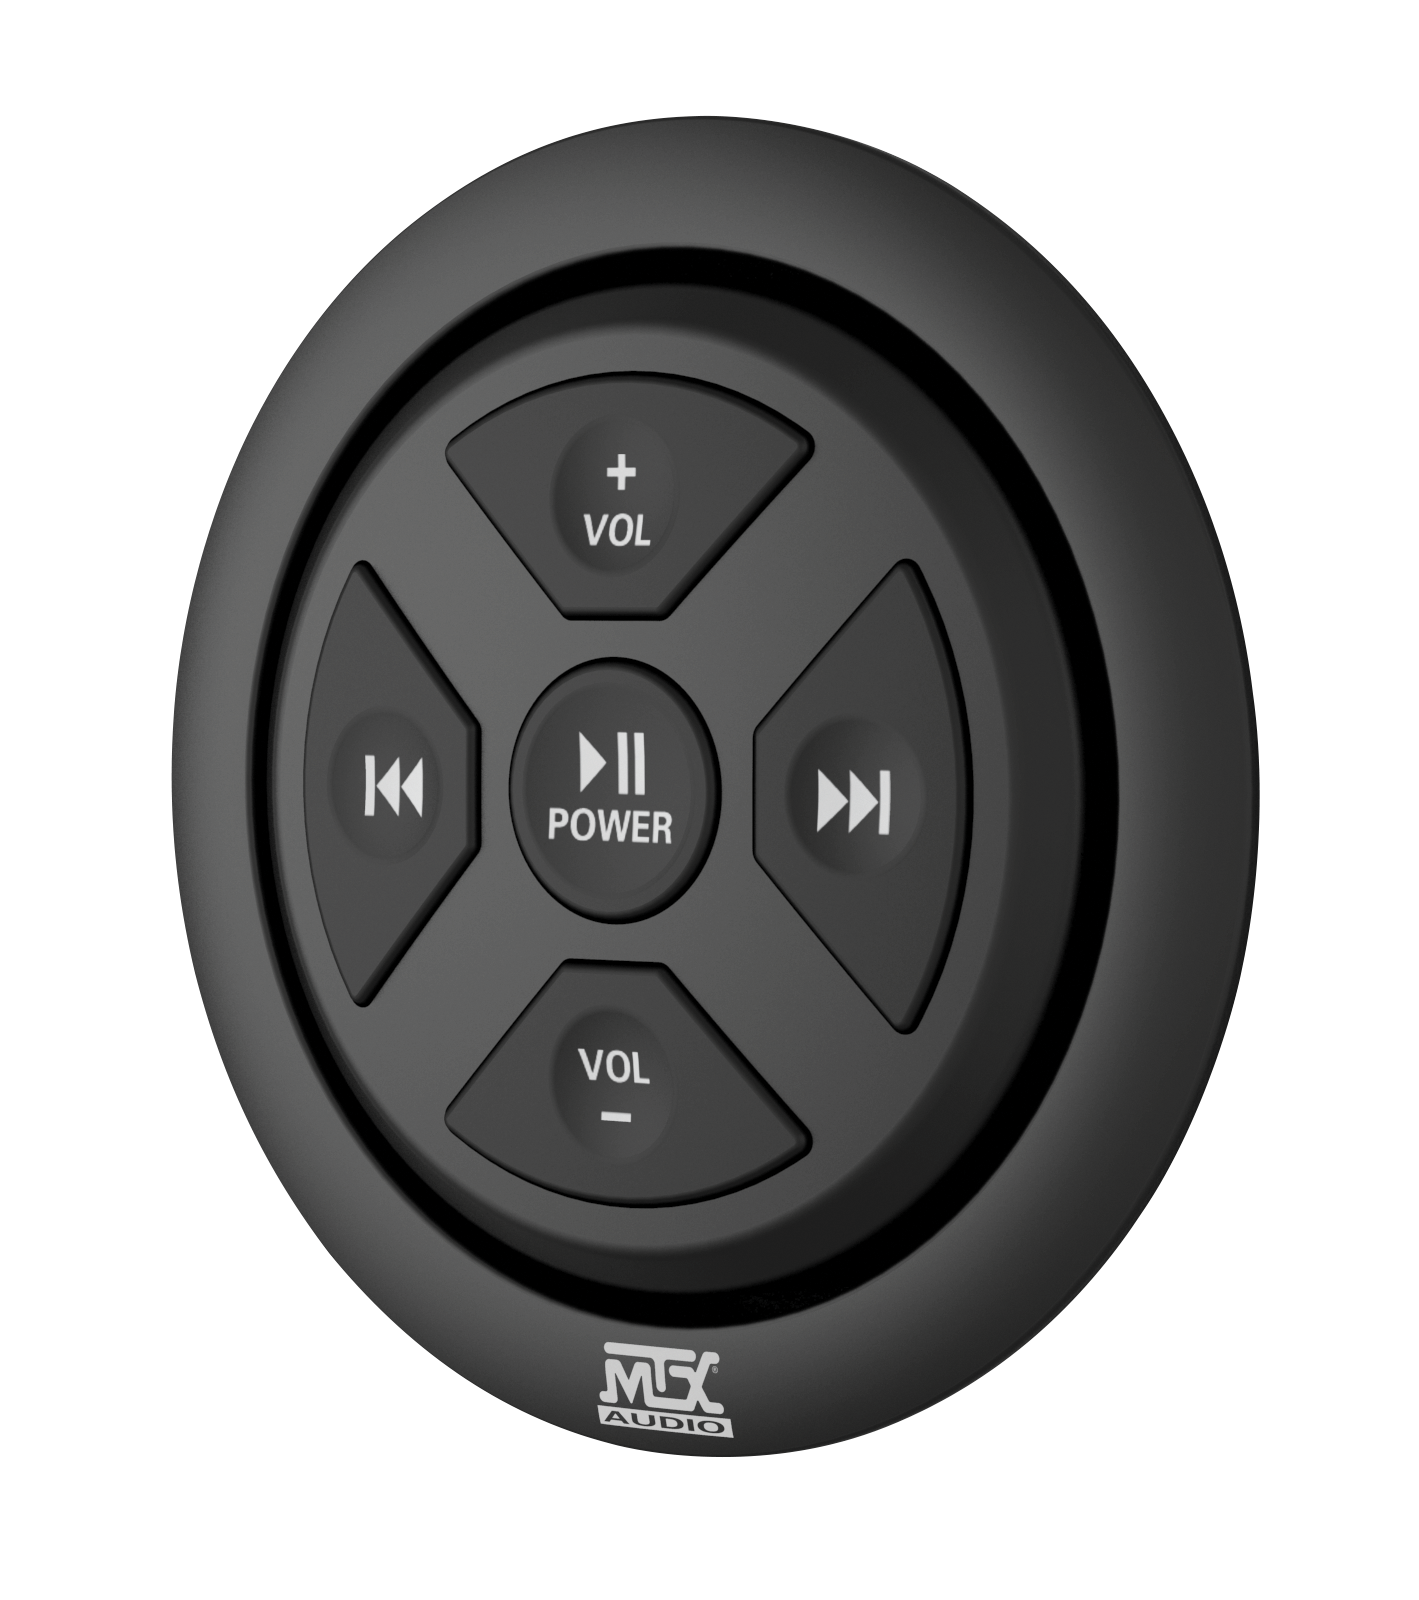 MTX MUDBTRC Bluetooth remote control